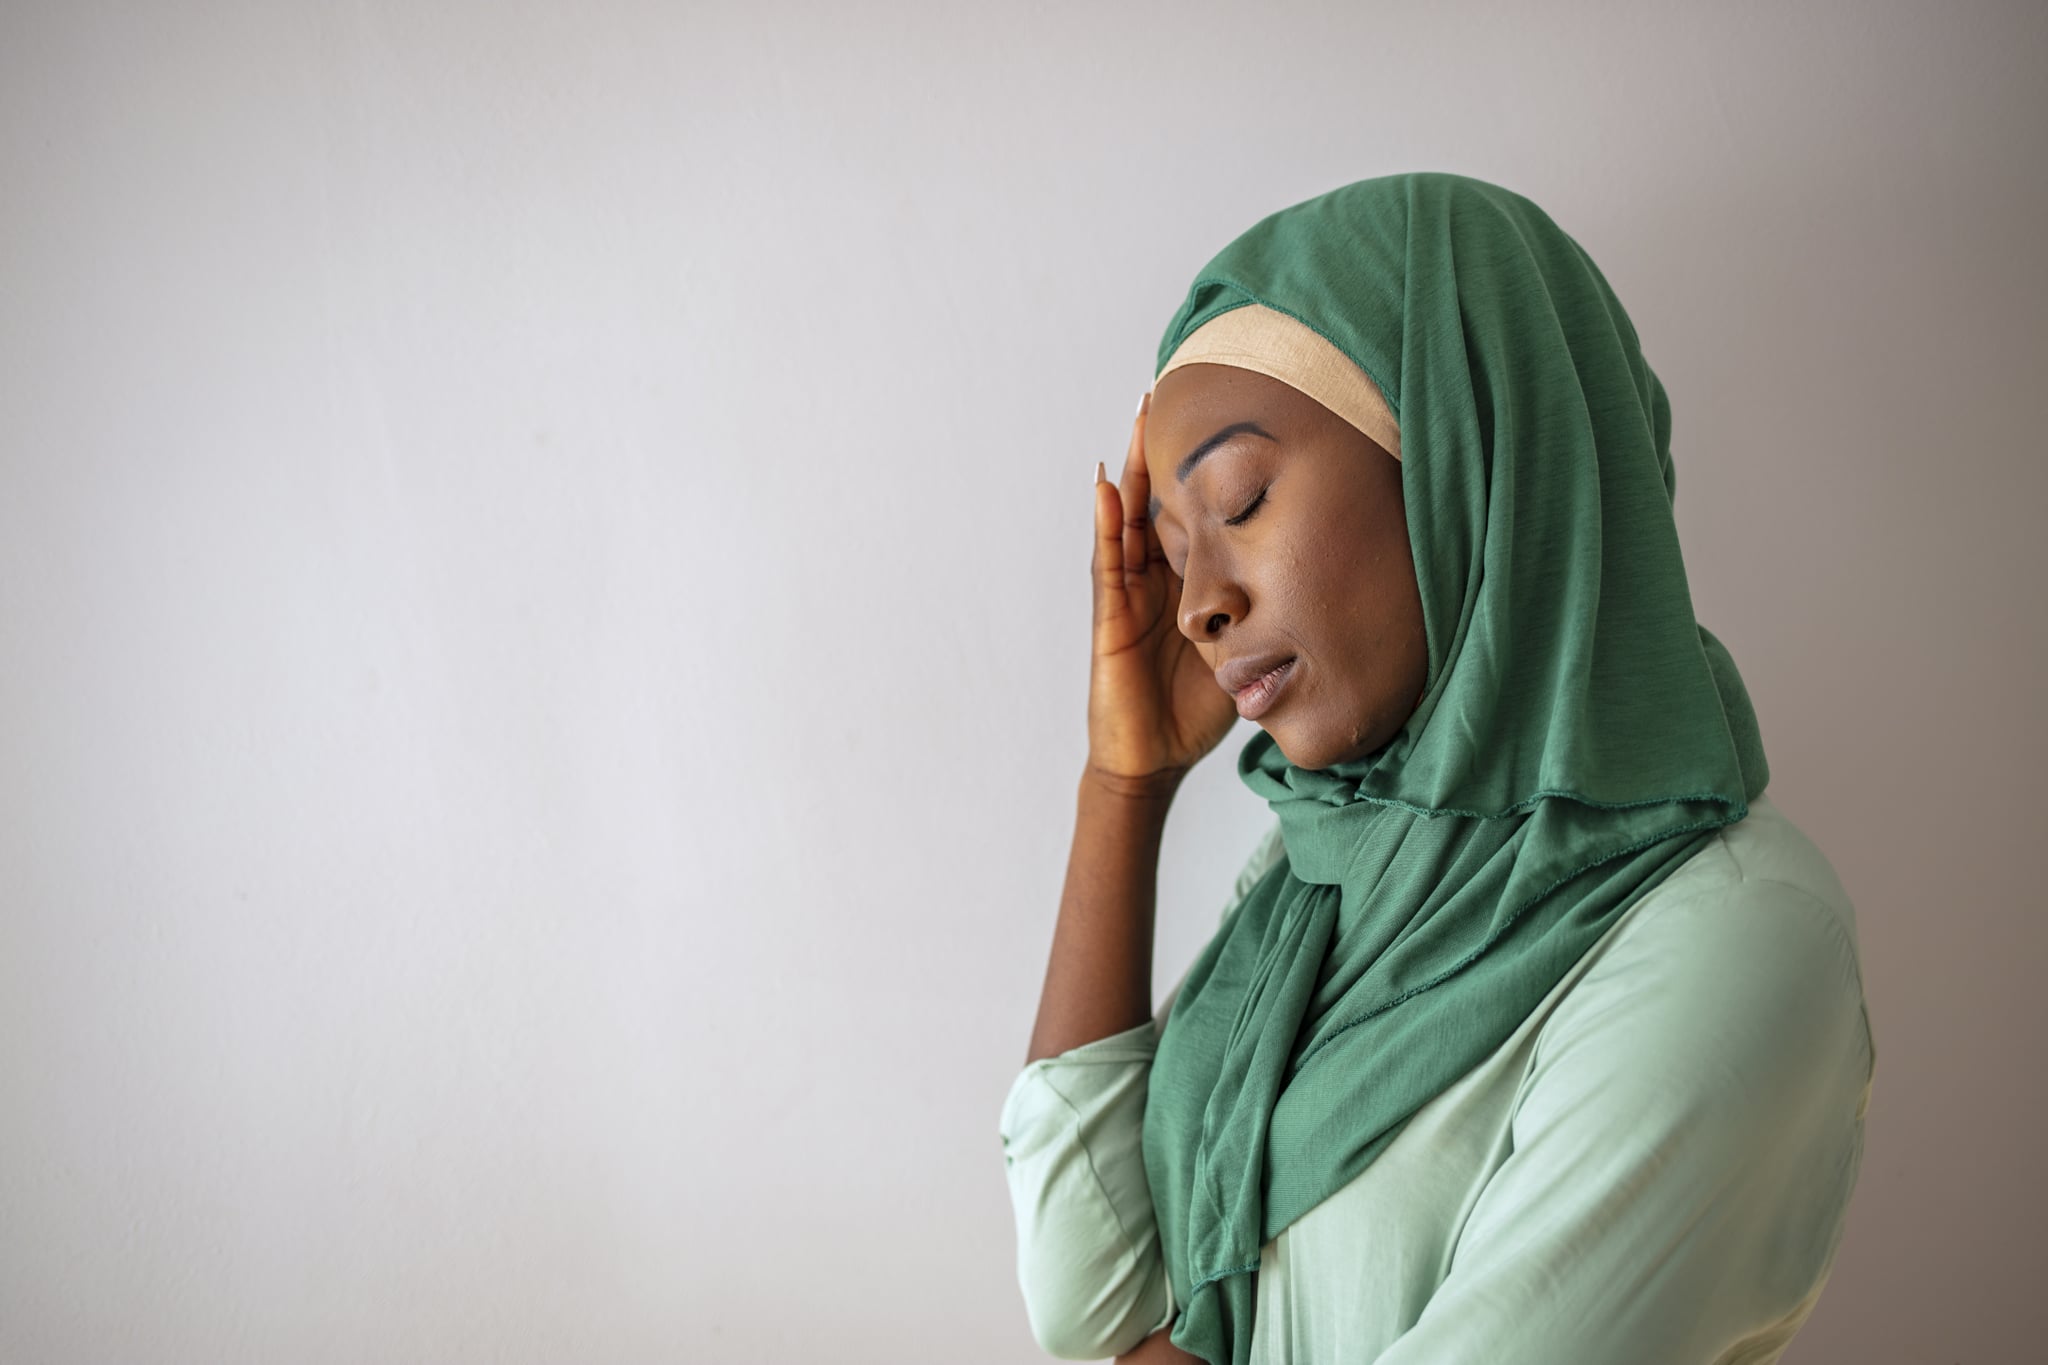 Muslim woman wearing hijab with hand on head.